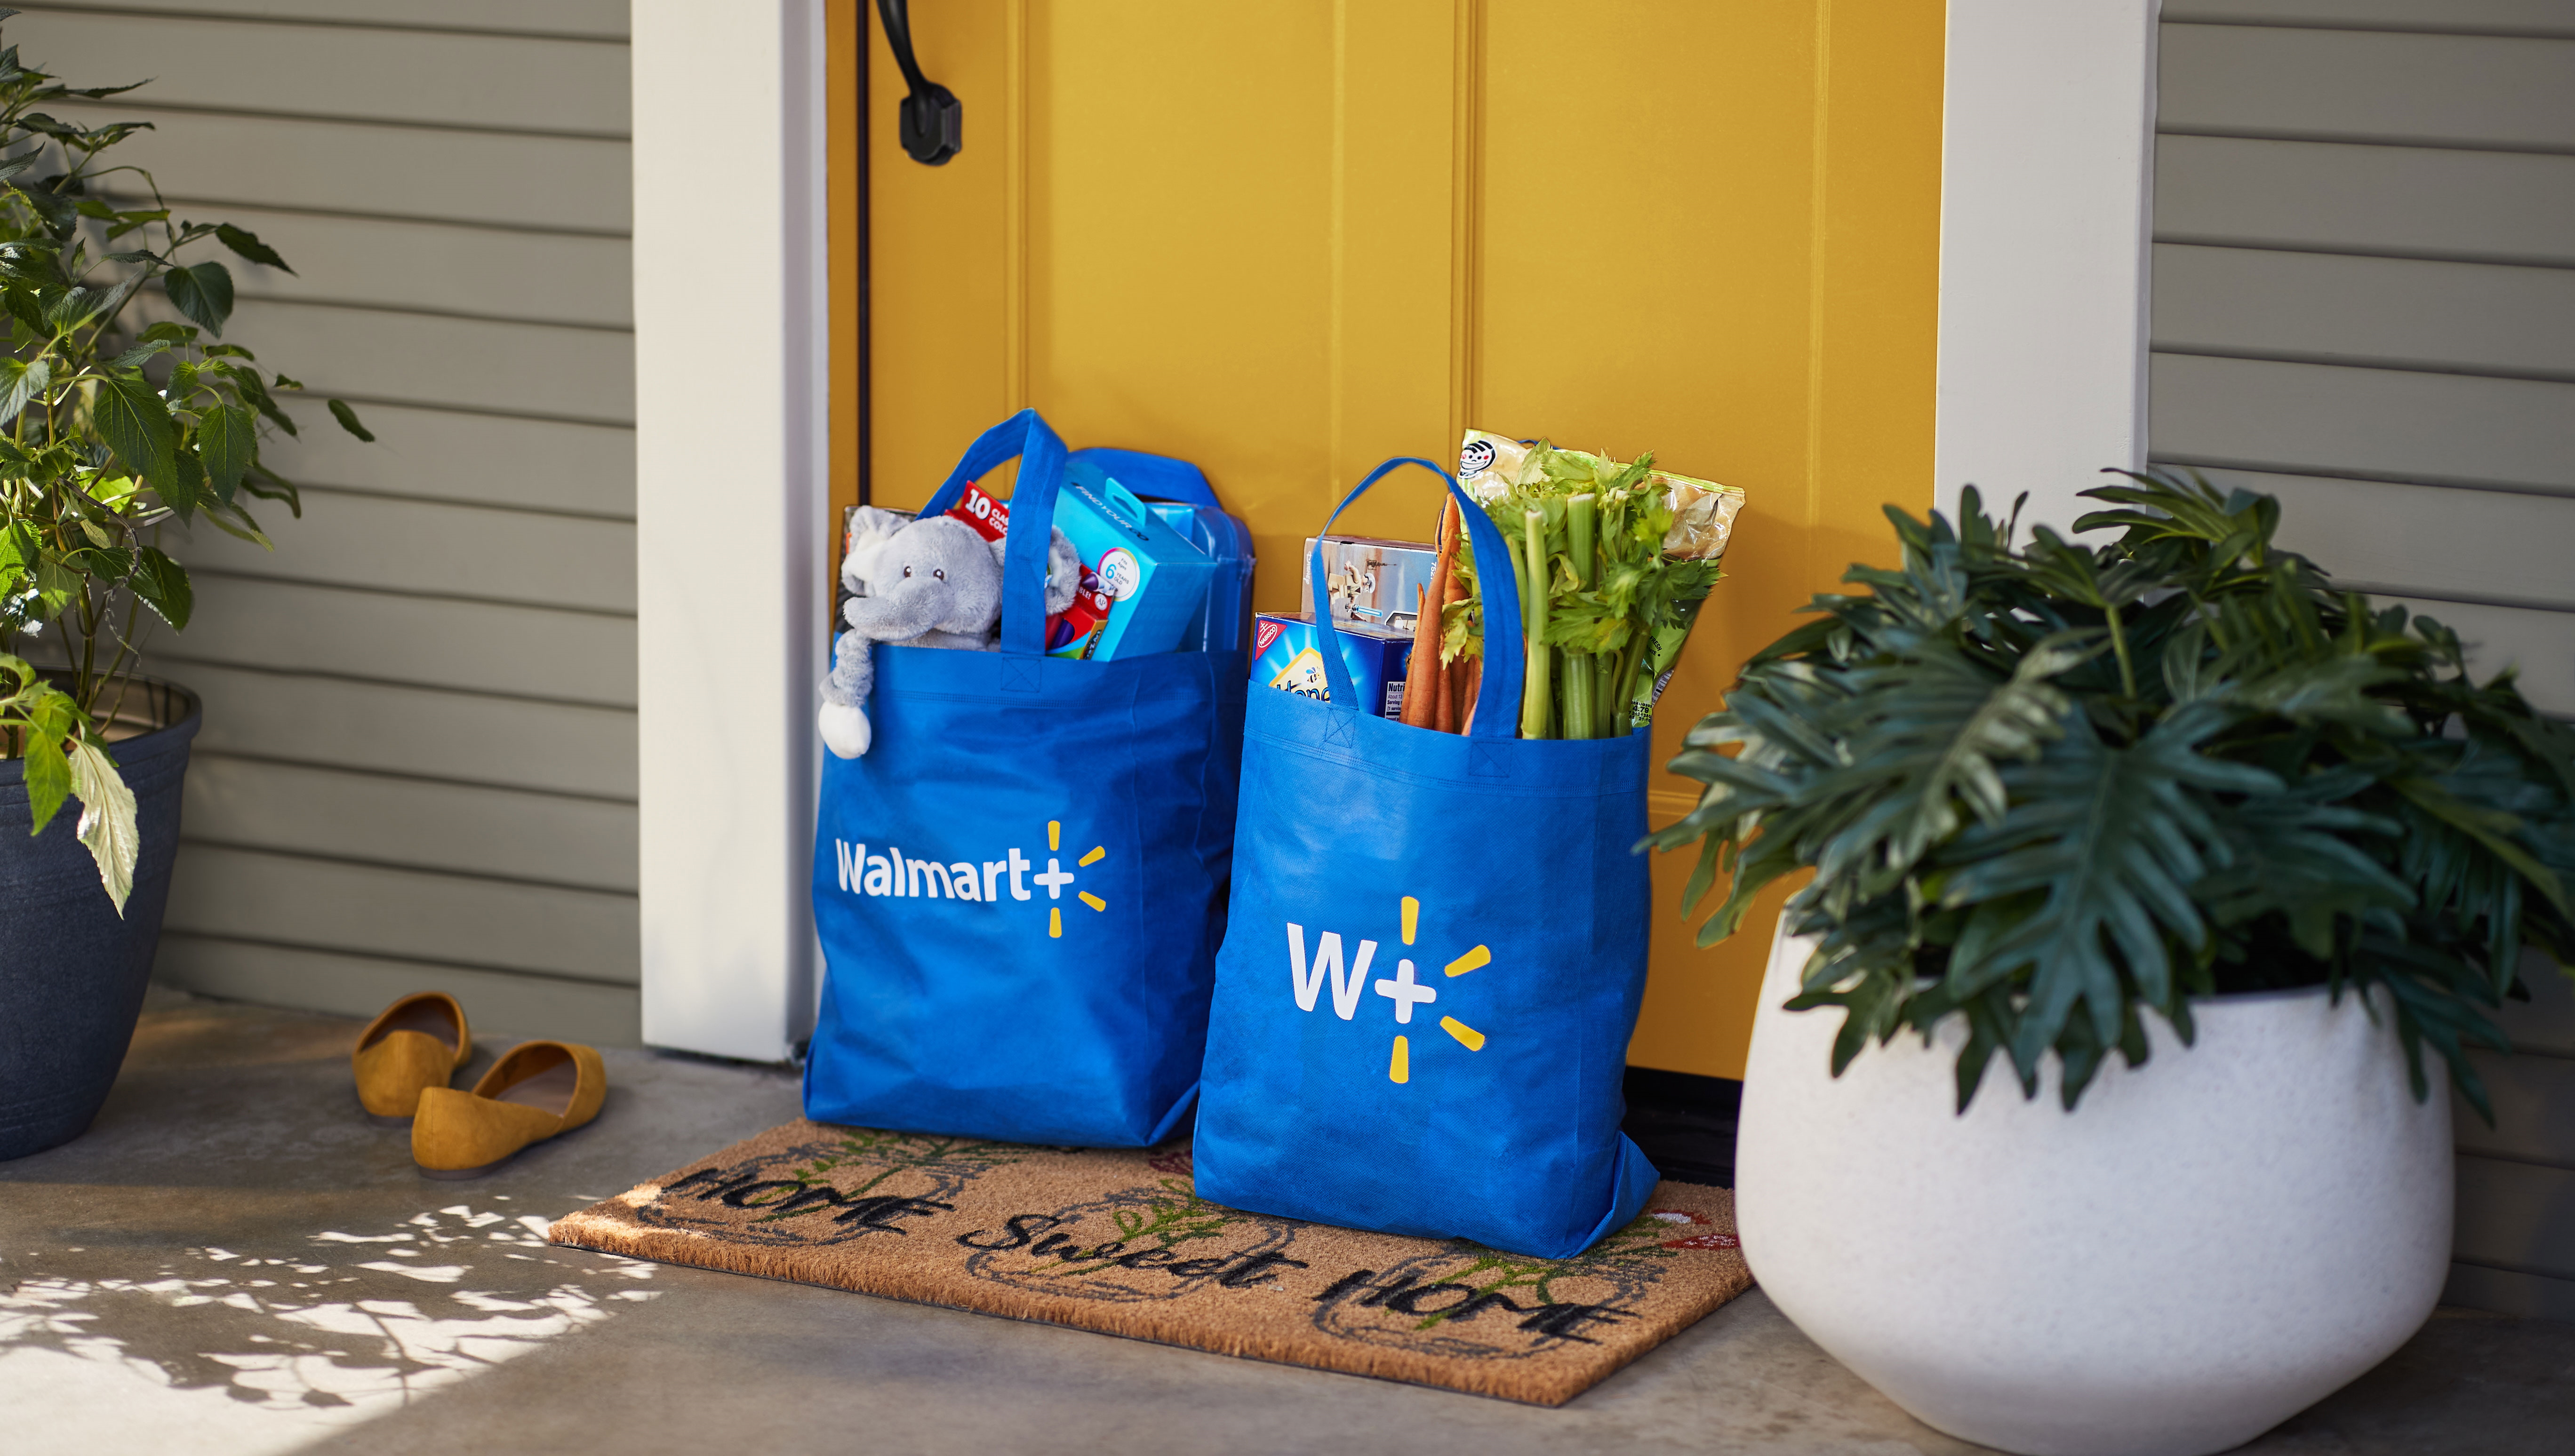 Walmart Plus shopping bags on a doorstep